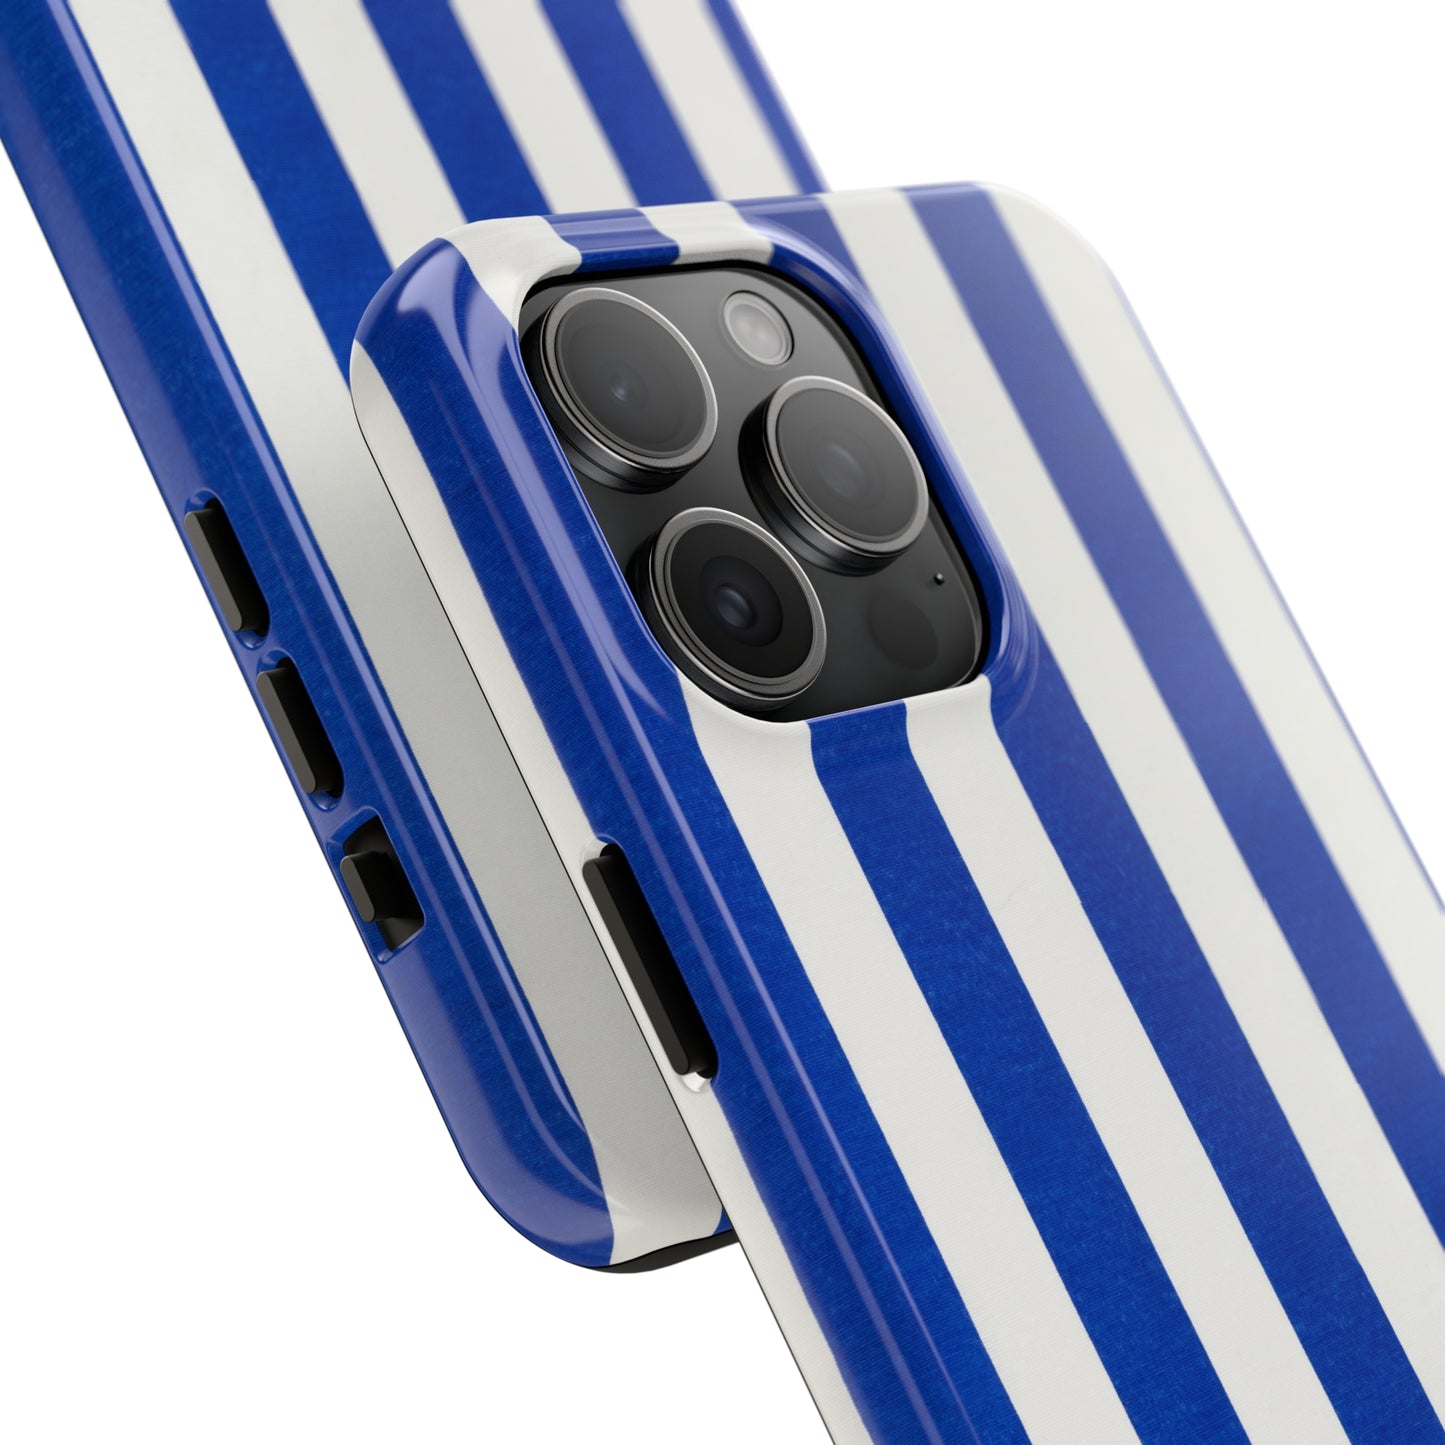 Blue & White Stripes Phone Case